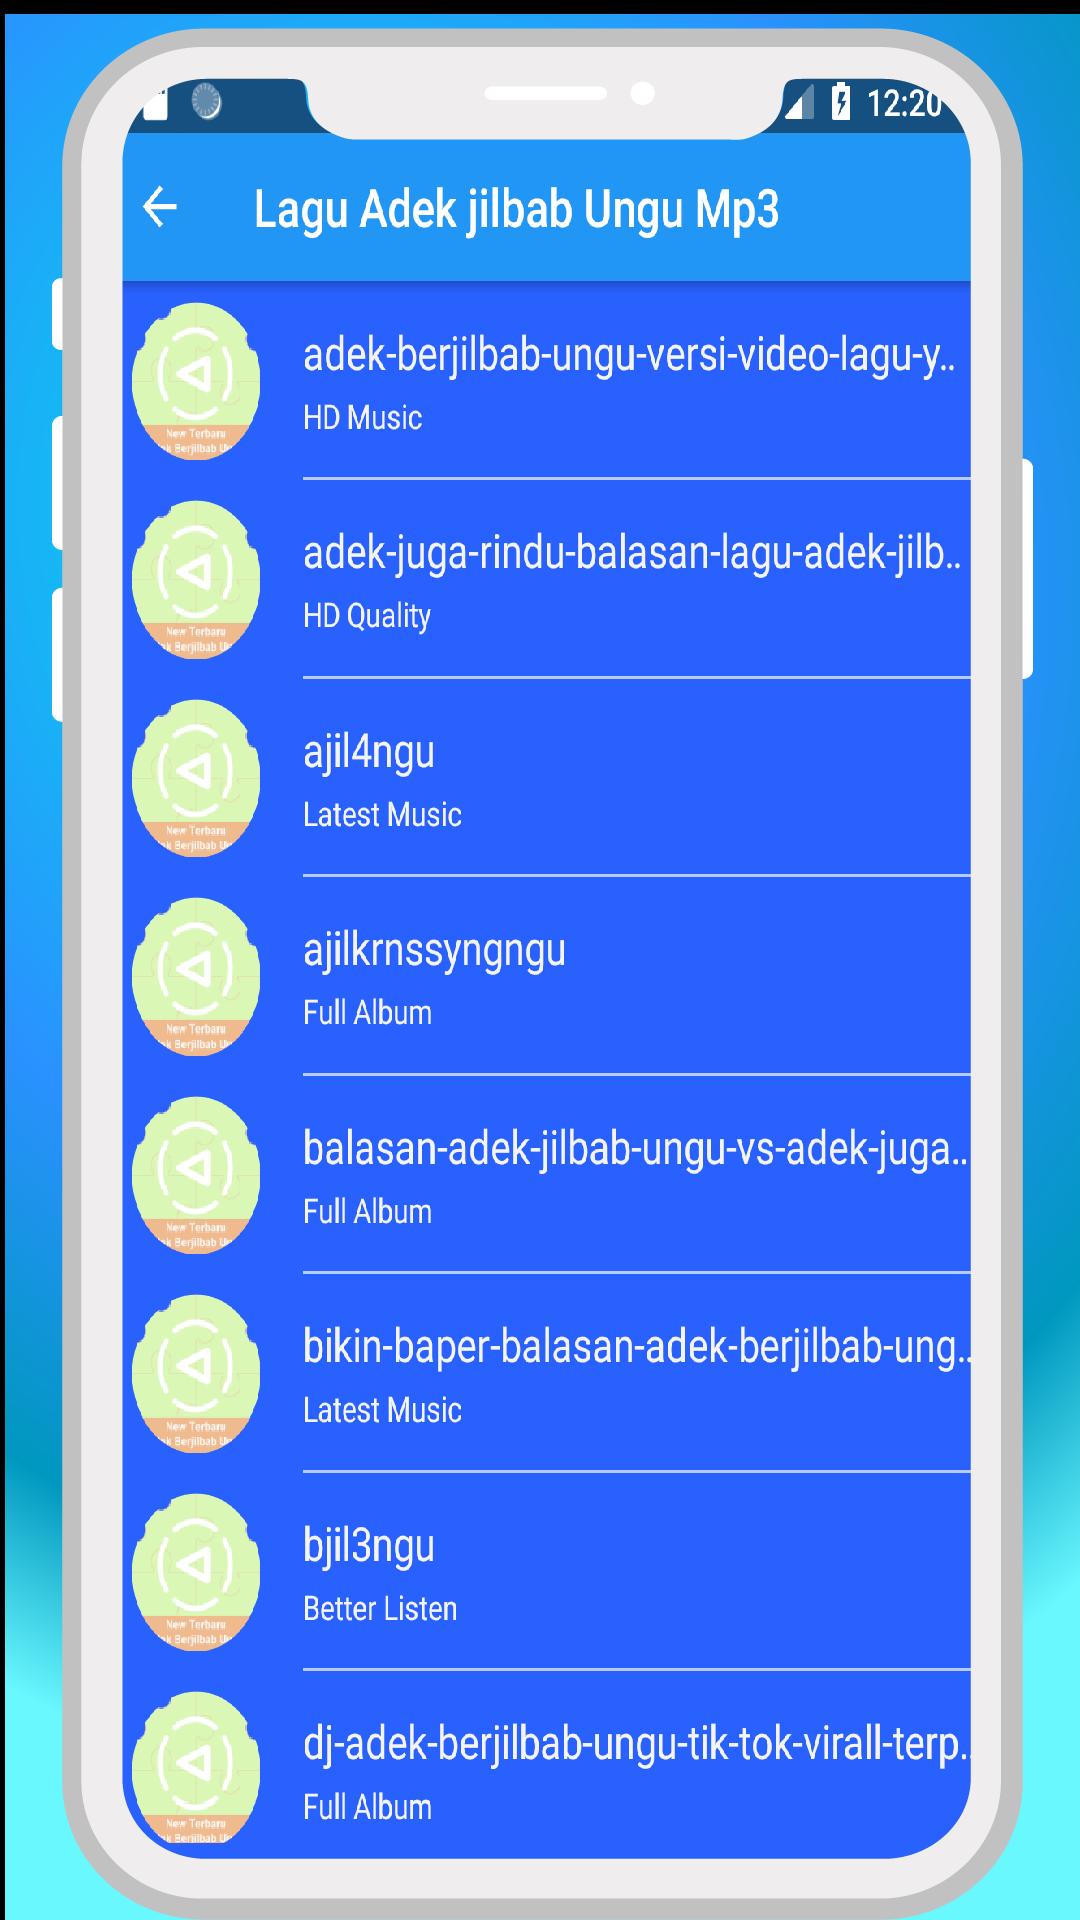 Android Icin Kumpulan Lagu Adek Jilbab Ungu Mp3 Terbaru 2019 Apk Yi Indir